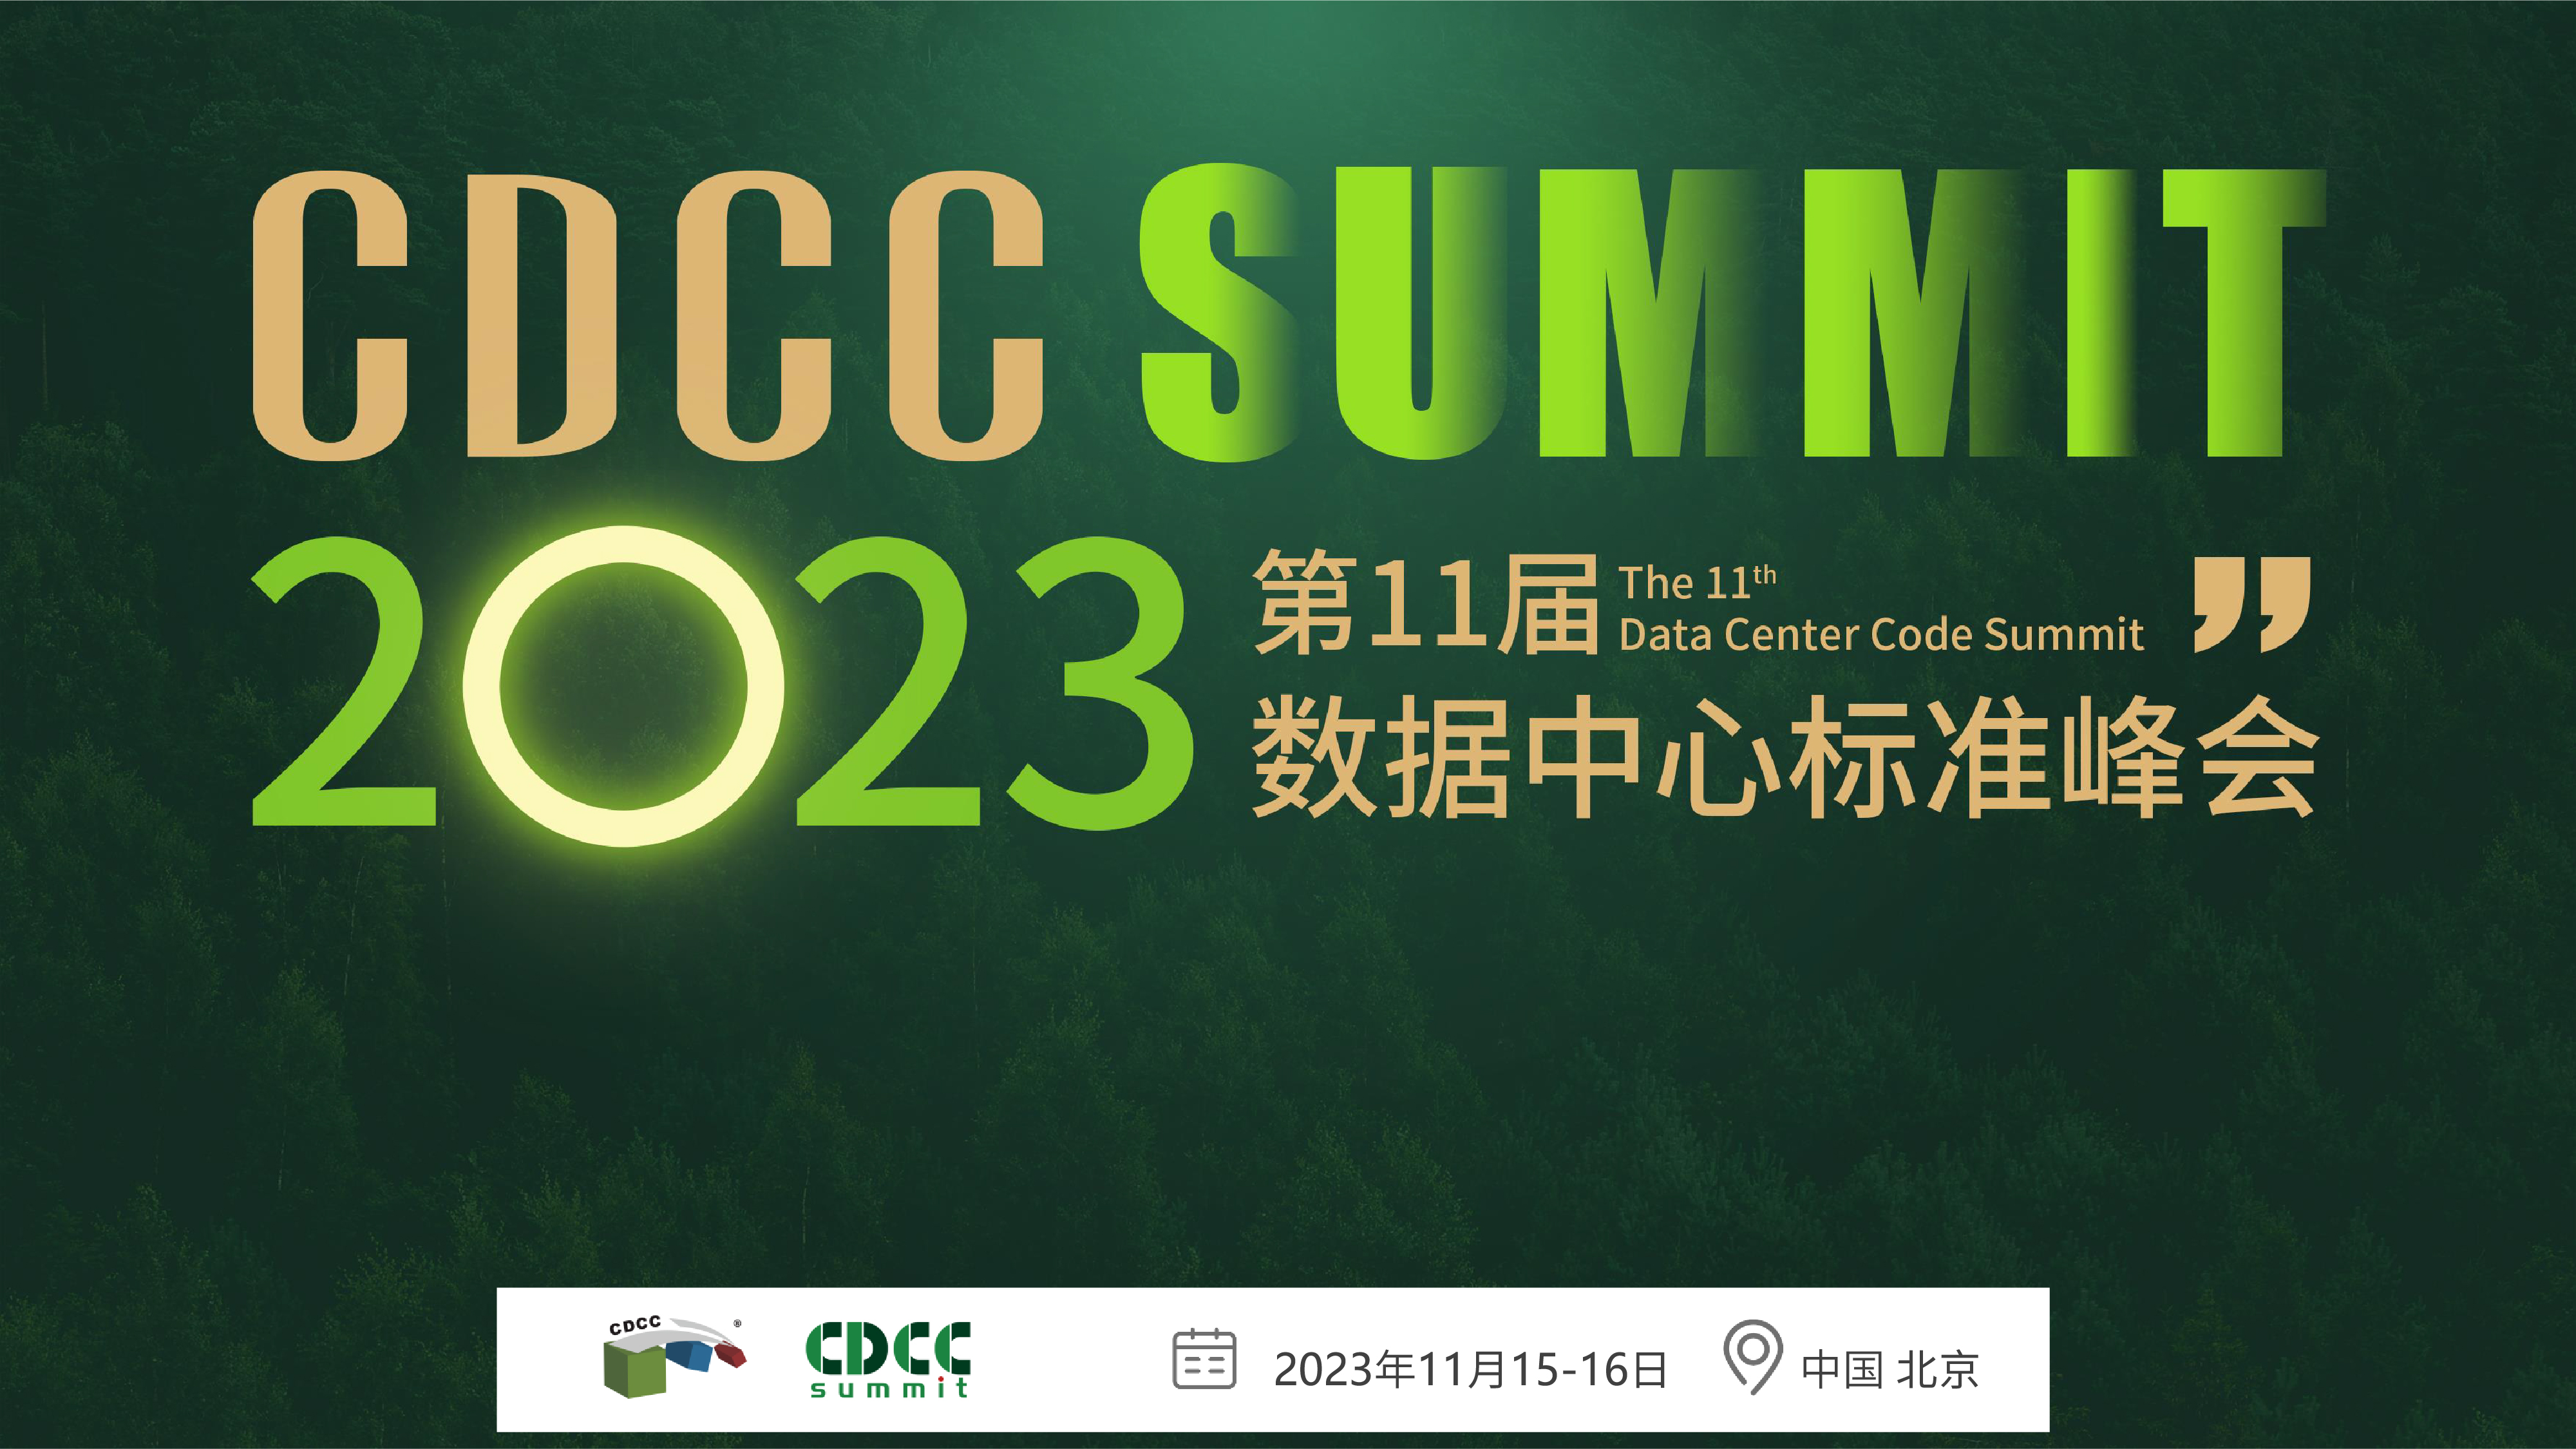 cdcc-summit.jpg